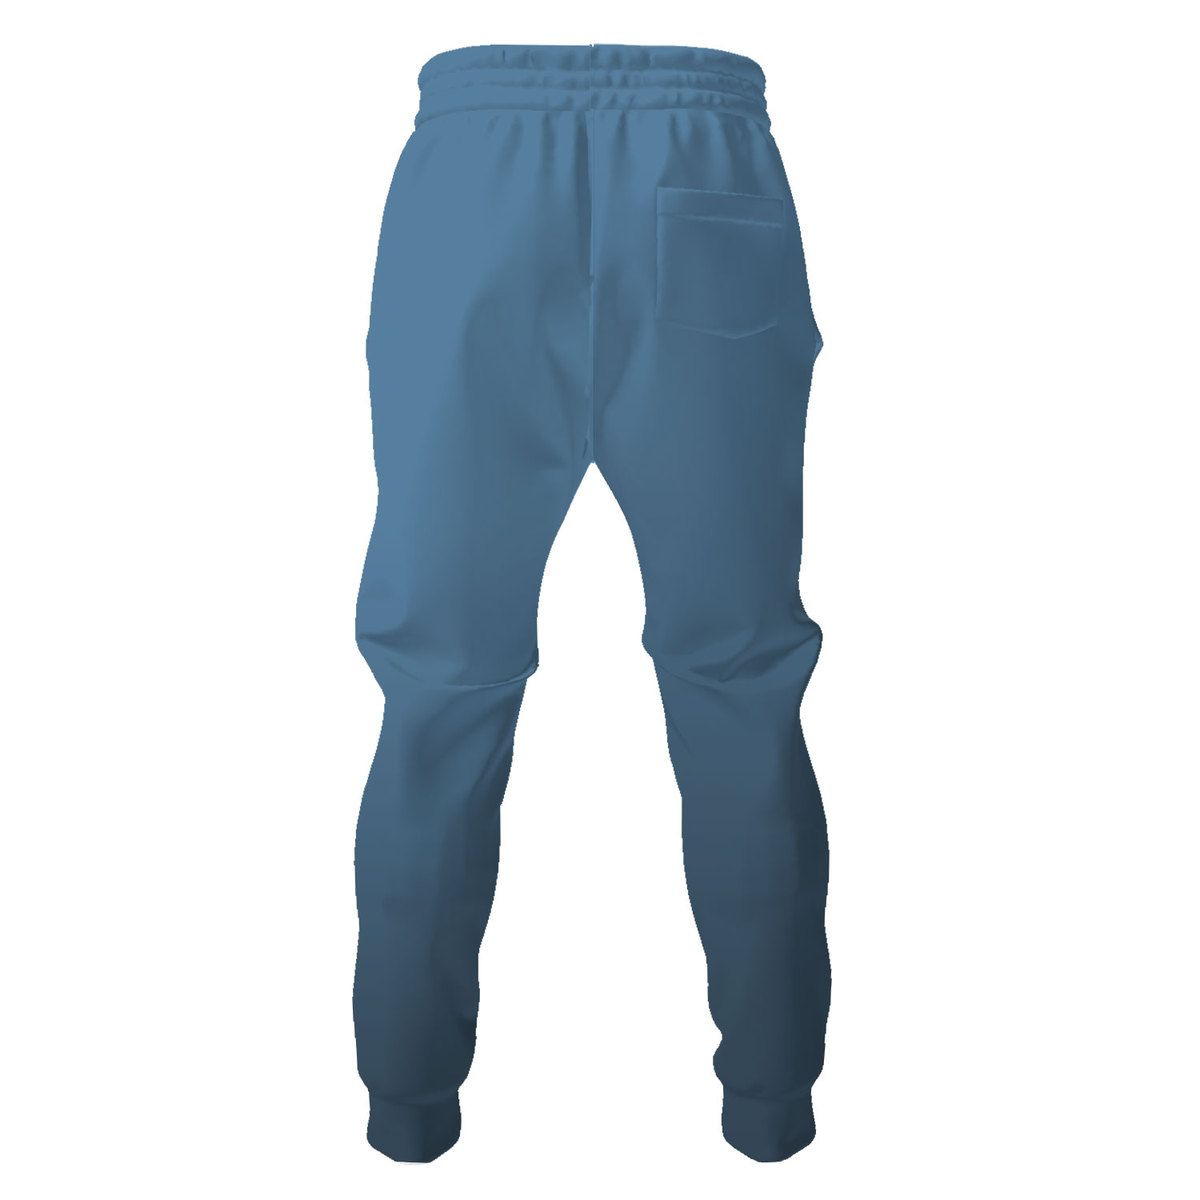 Pyro Blue Team TF2 pants